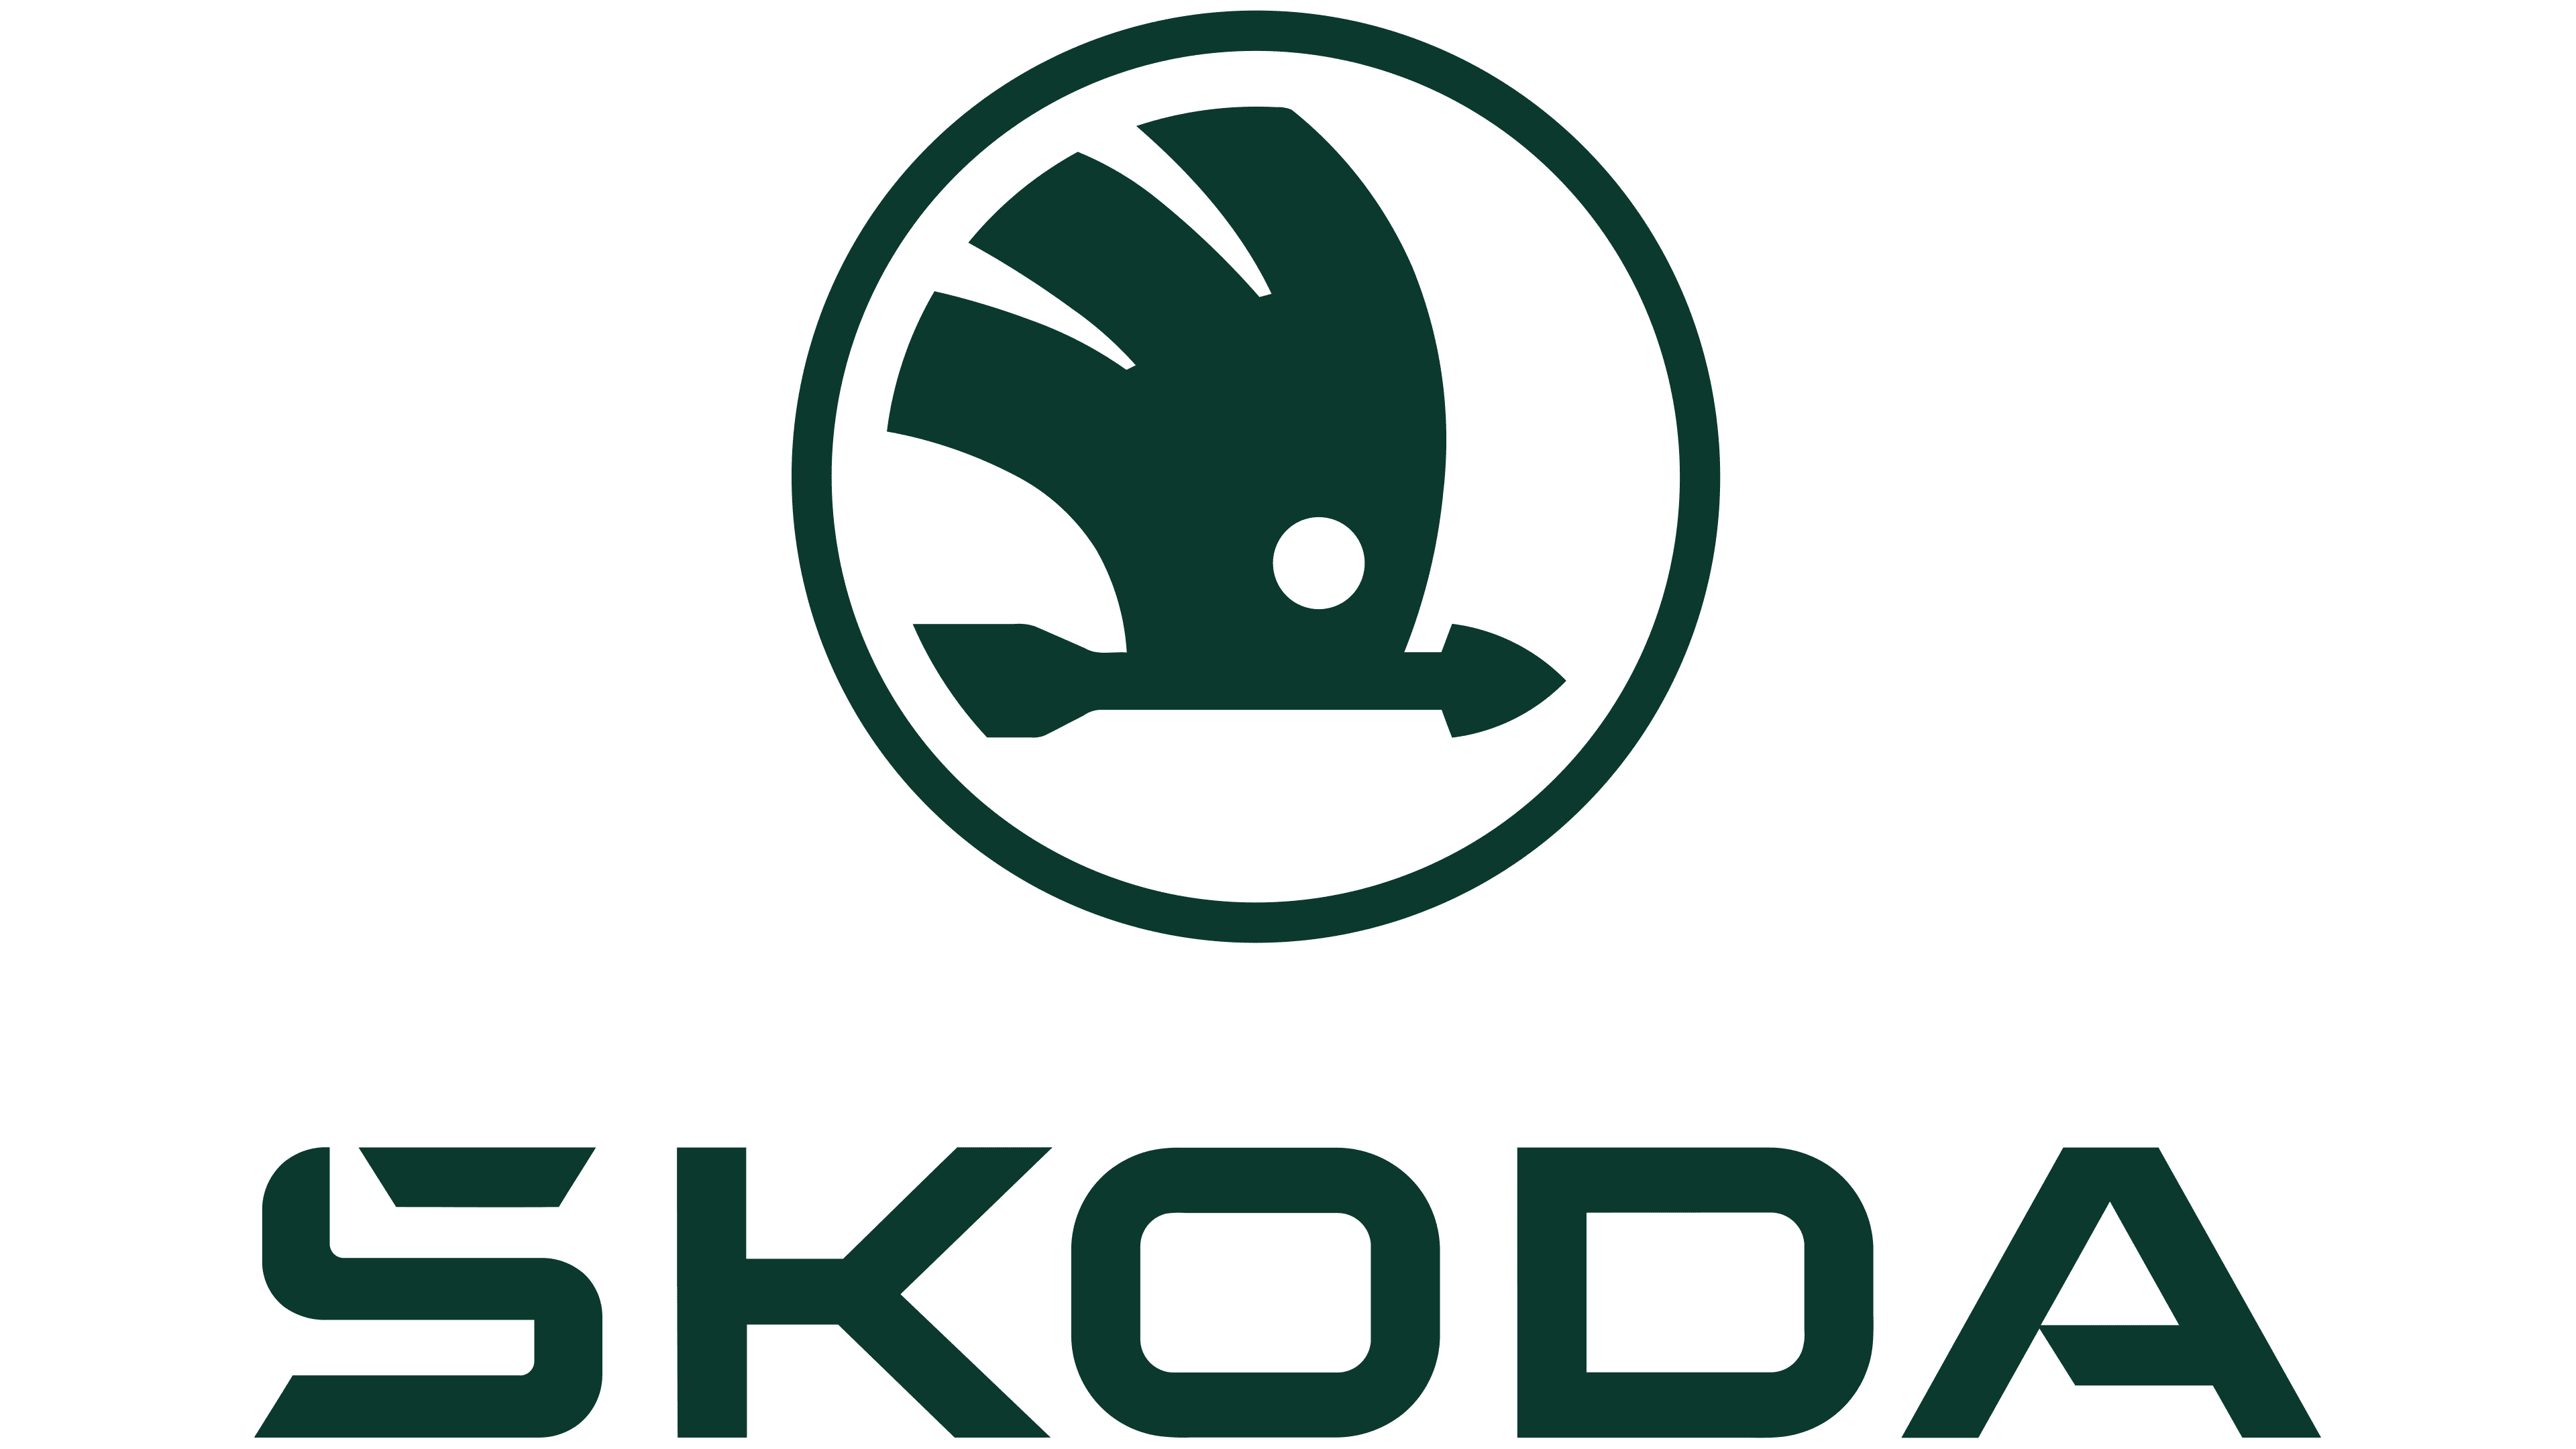 Download Skoda-logo Vwlogo PNG Image with No Background - PNGkey.com